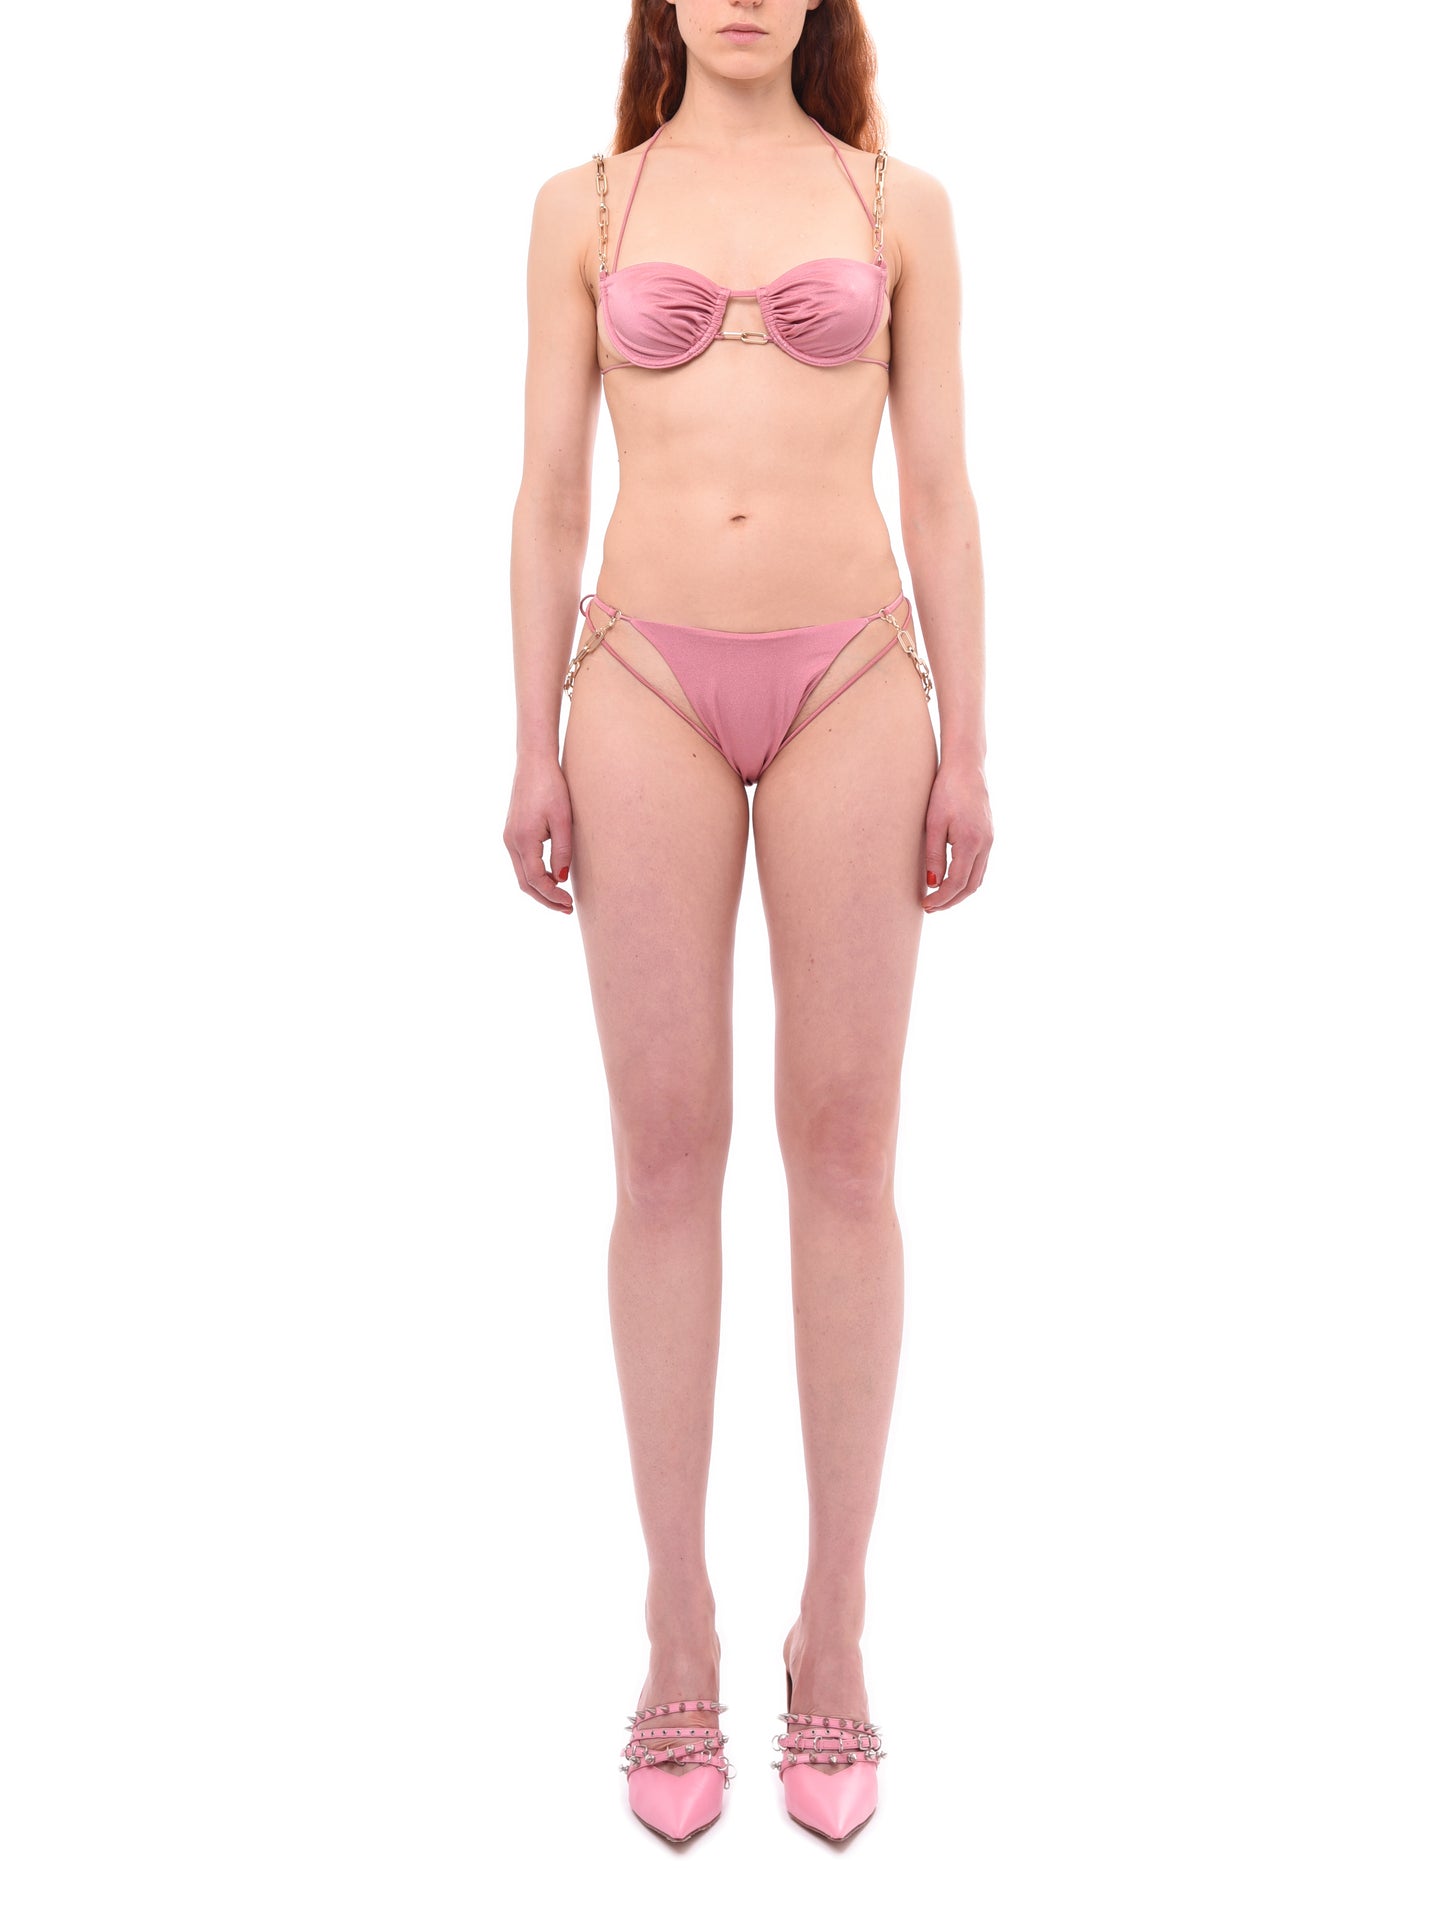 Dilara Findikoglu Belly Dancer Pink Bikini Top